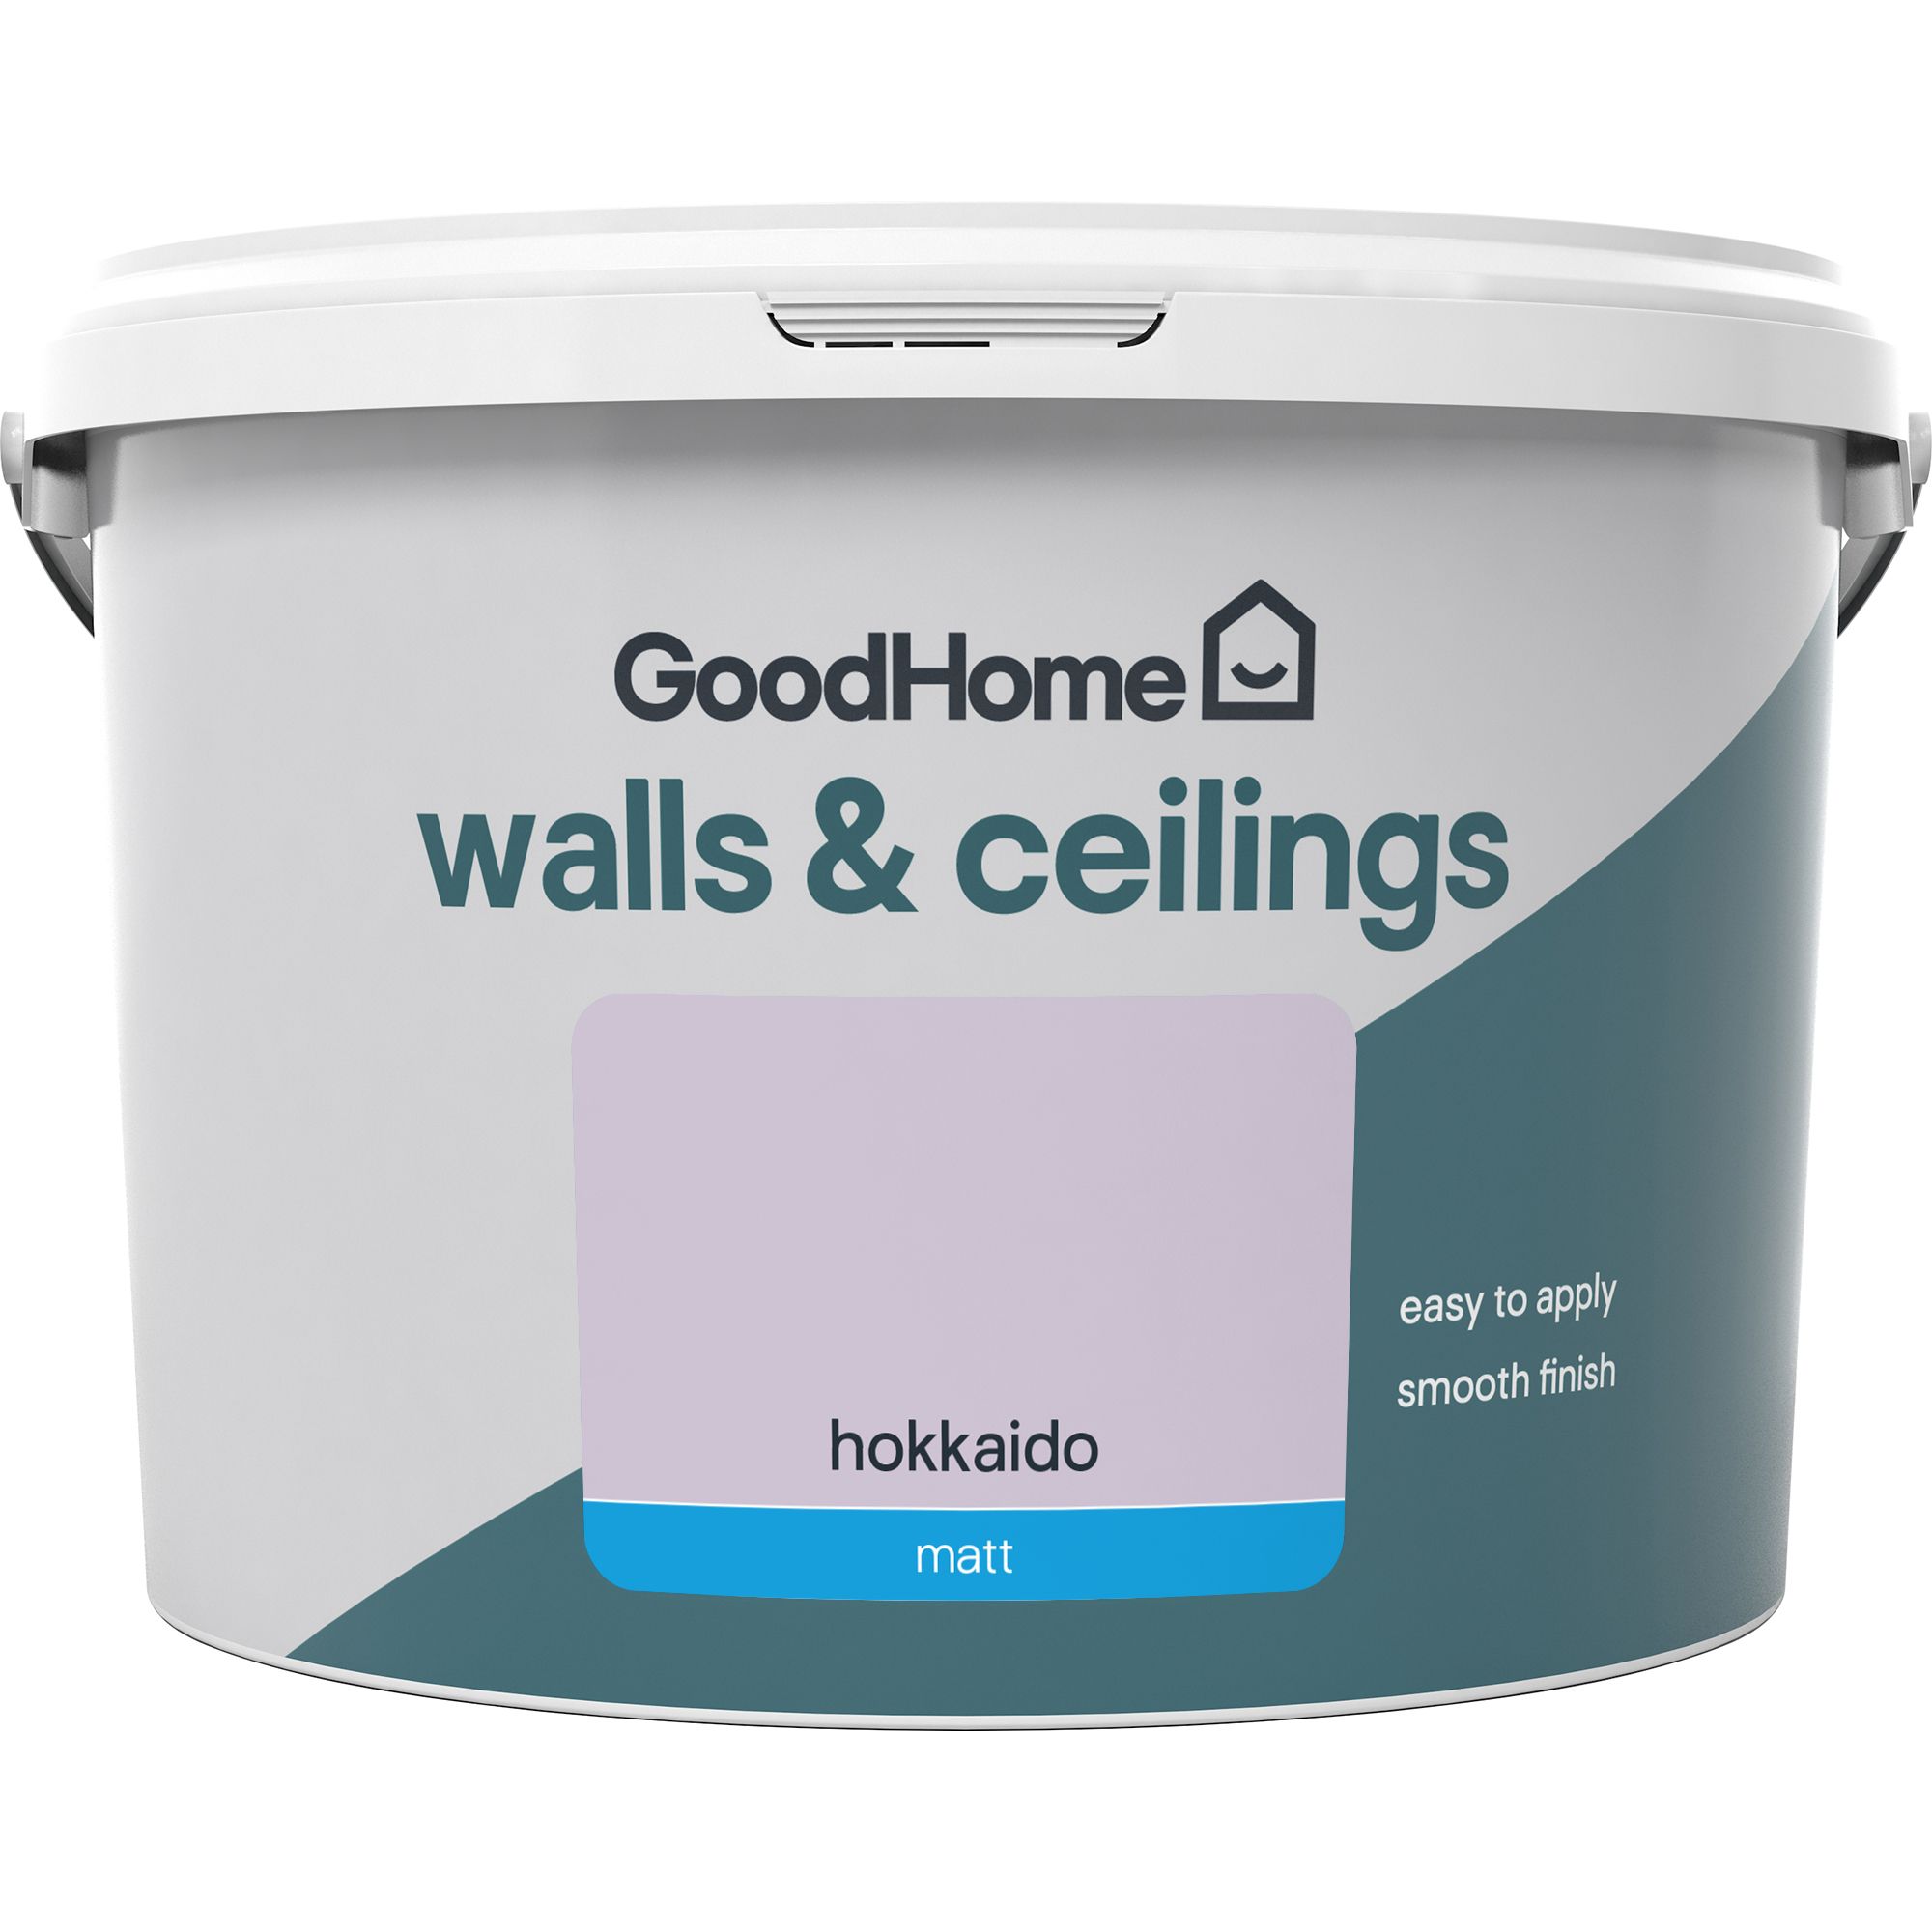 GoodHome Walls & ceilings Hokkaido Matt Emulsion paint, 2.5L